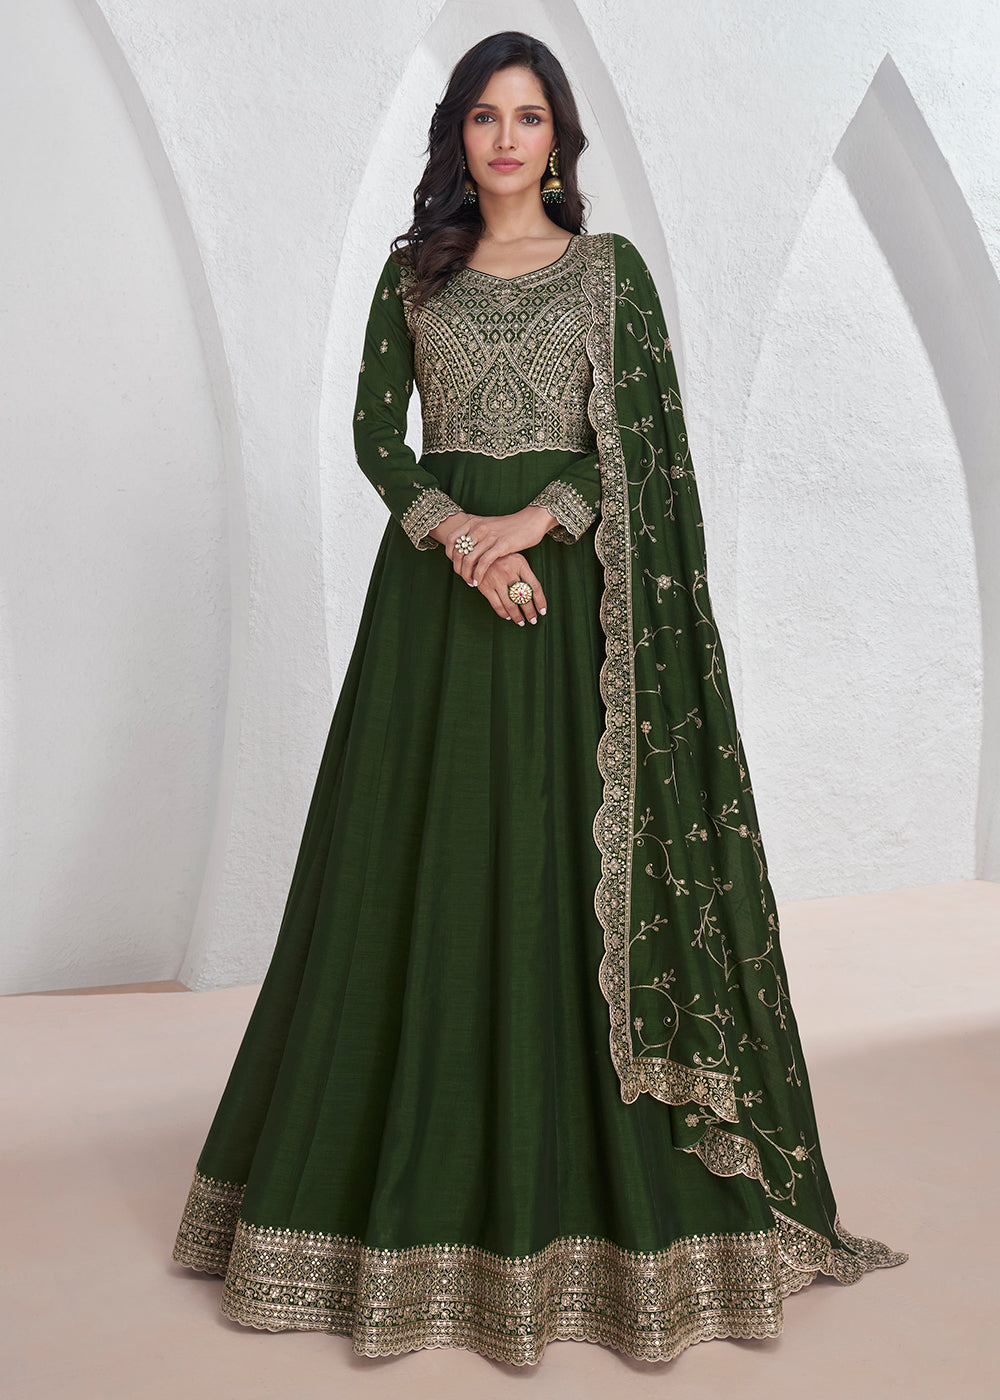 Buy Now Elegant Green Embroidered Silk Wedding Anarkali Dress Online in USA, UK, Australia, New Zealand, Canada & Worldwide at Empress Clothing. 